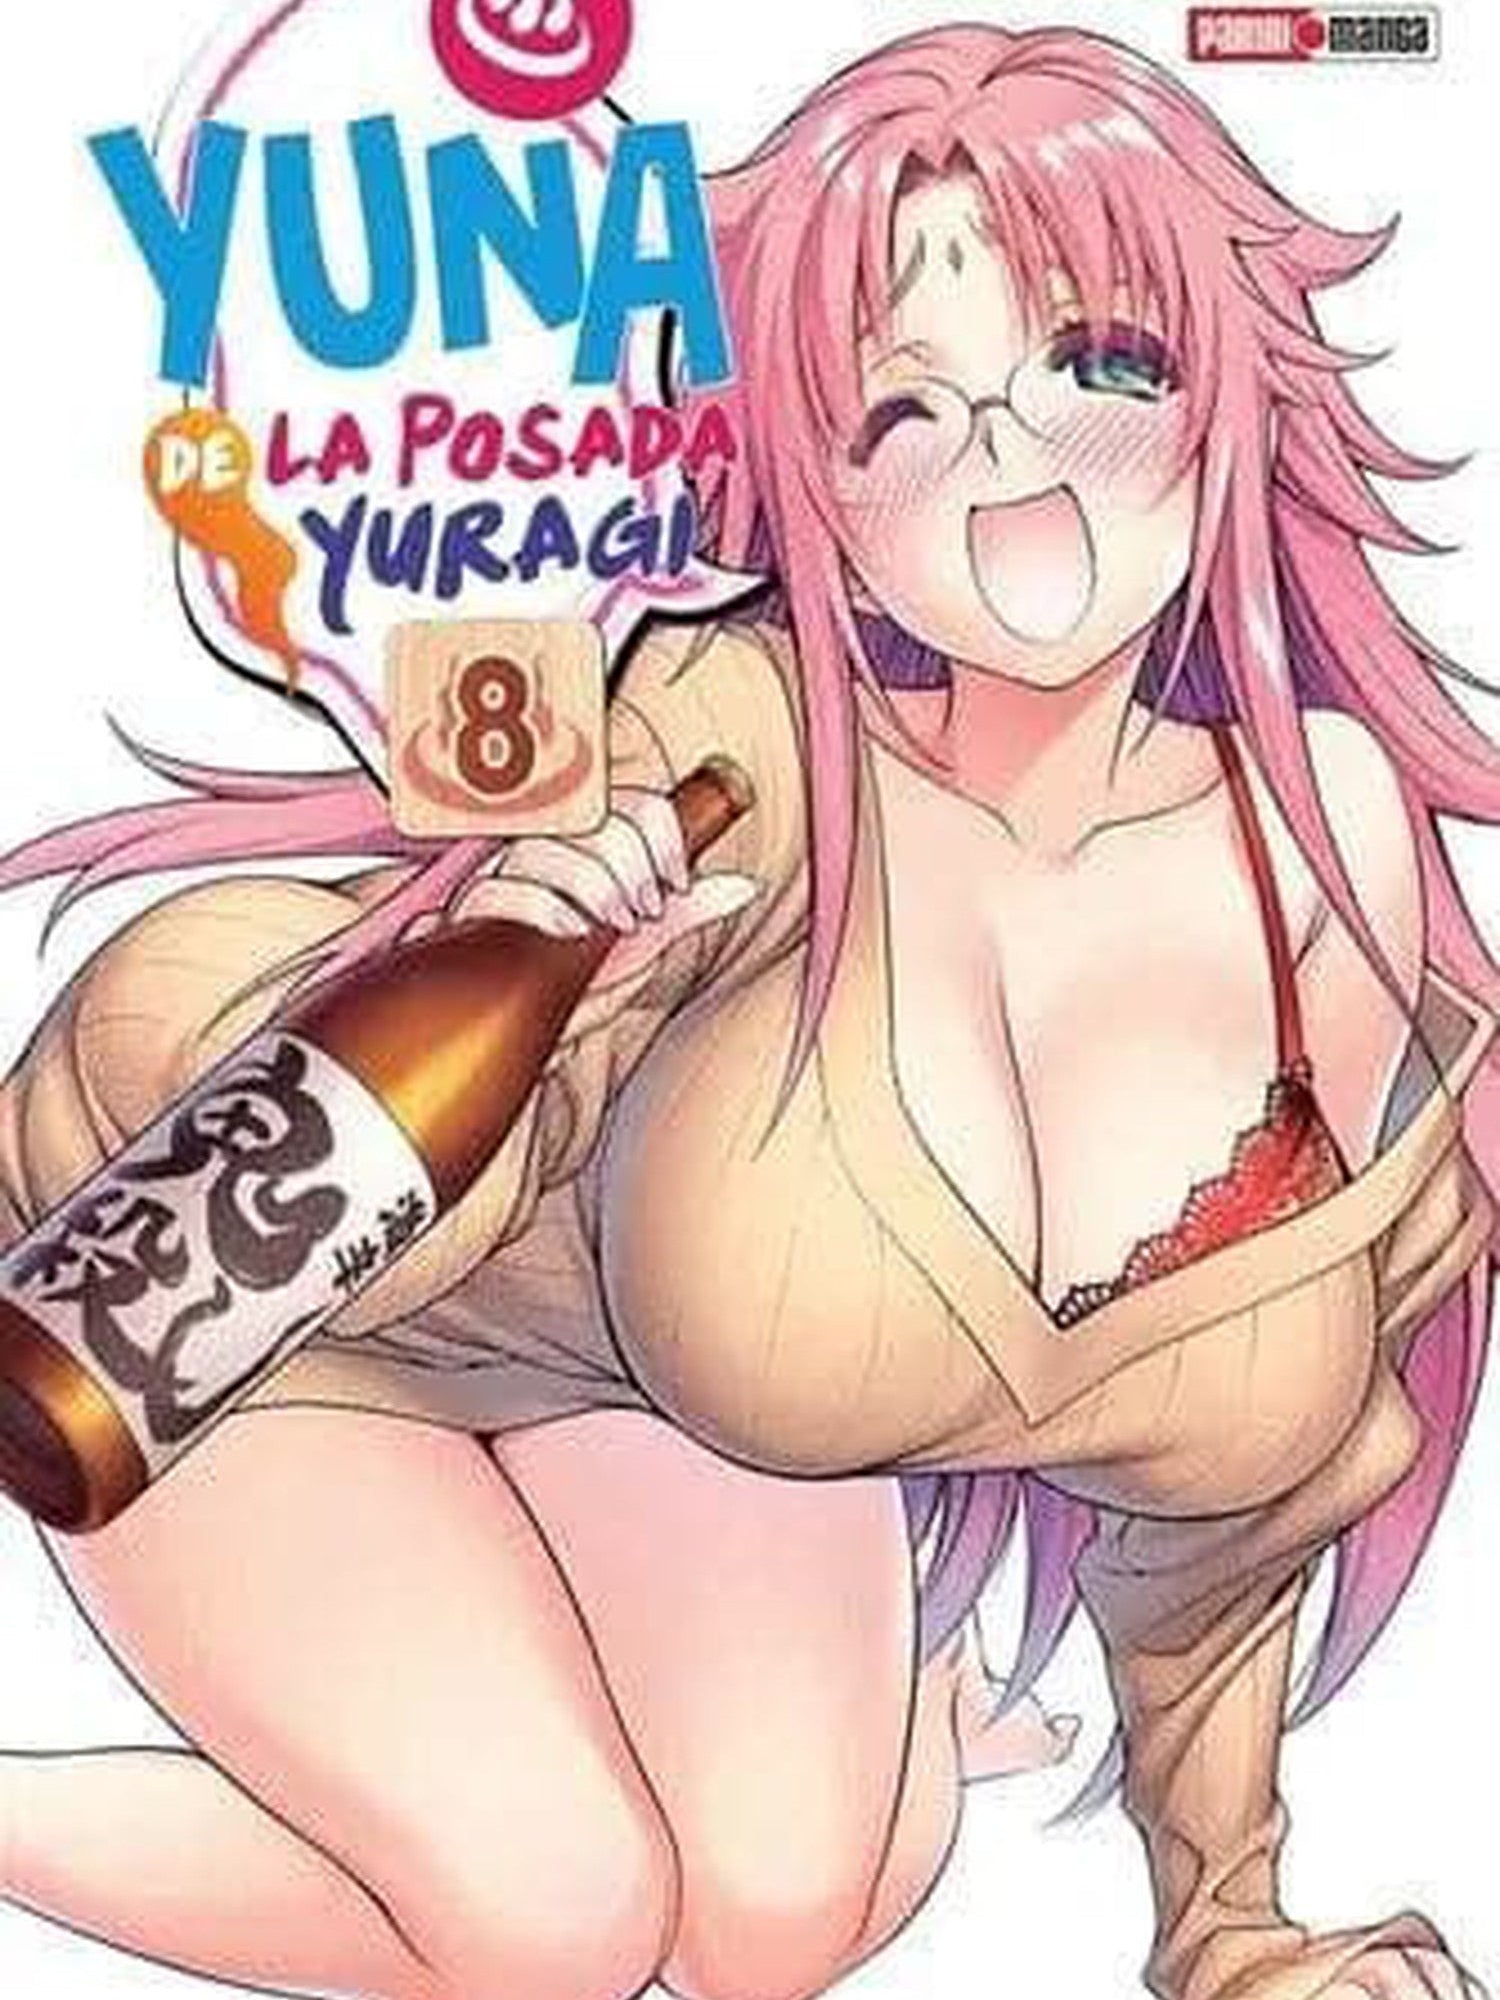 Yuna de la Posada Yuragi #8